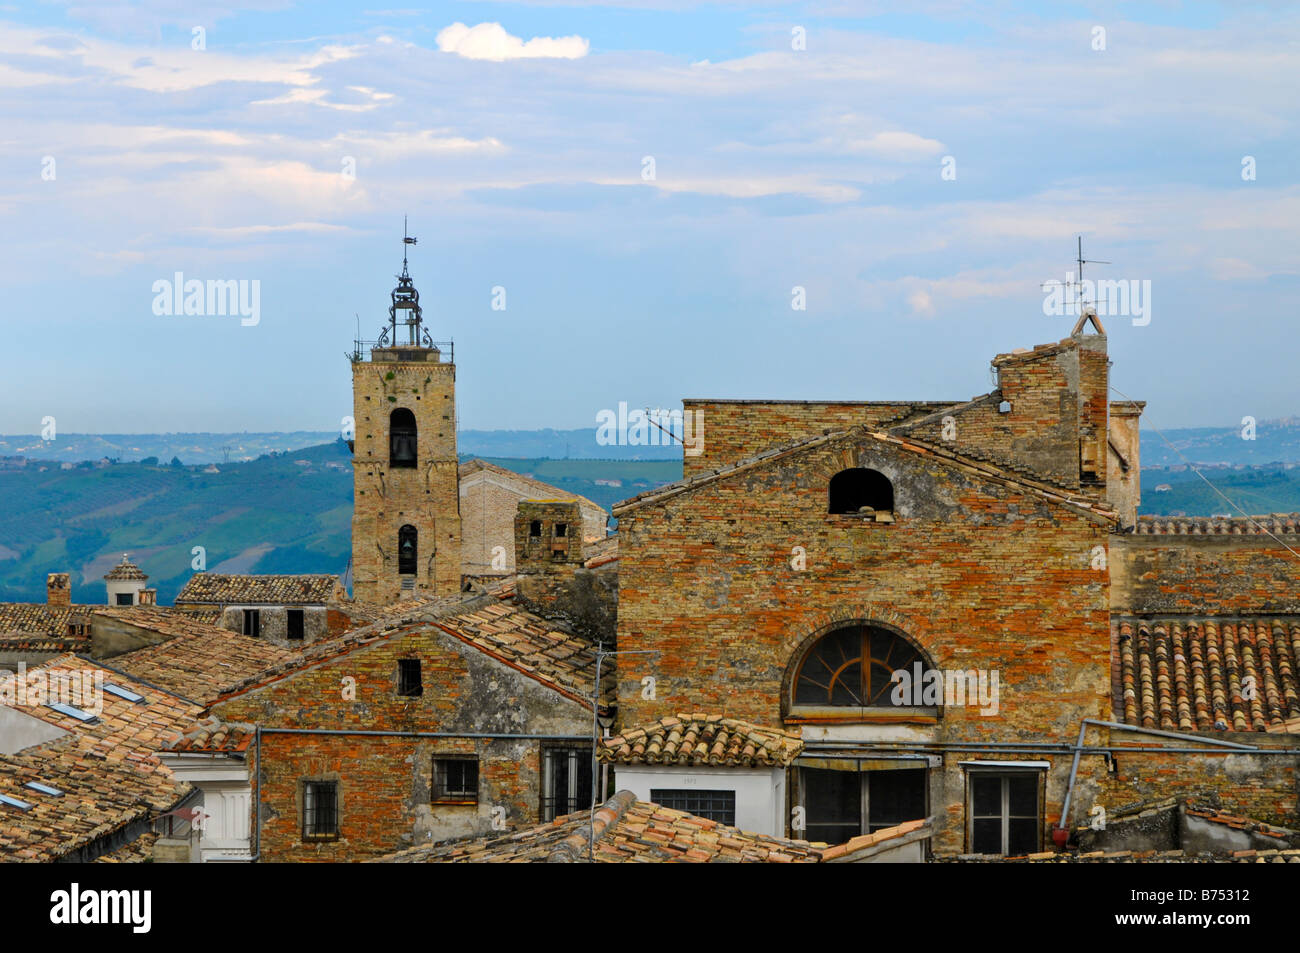 The Hill Town Of Loreto Aprutino Abruzzo Region Italy Stock Photo Alamy